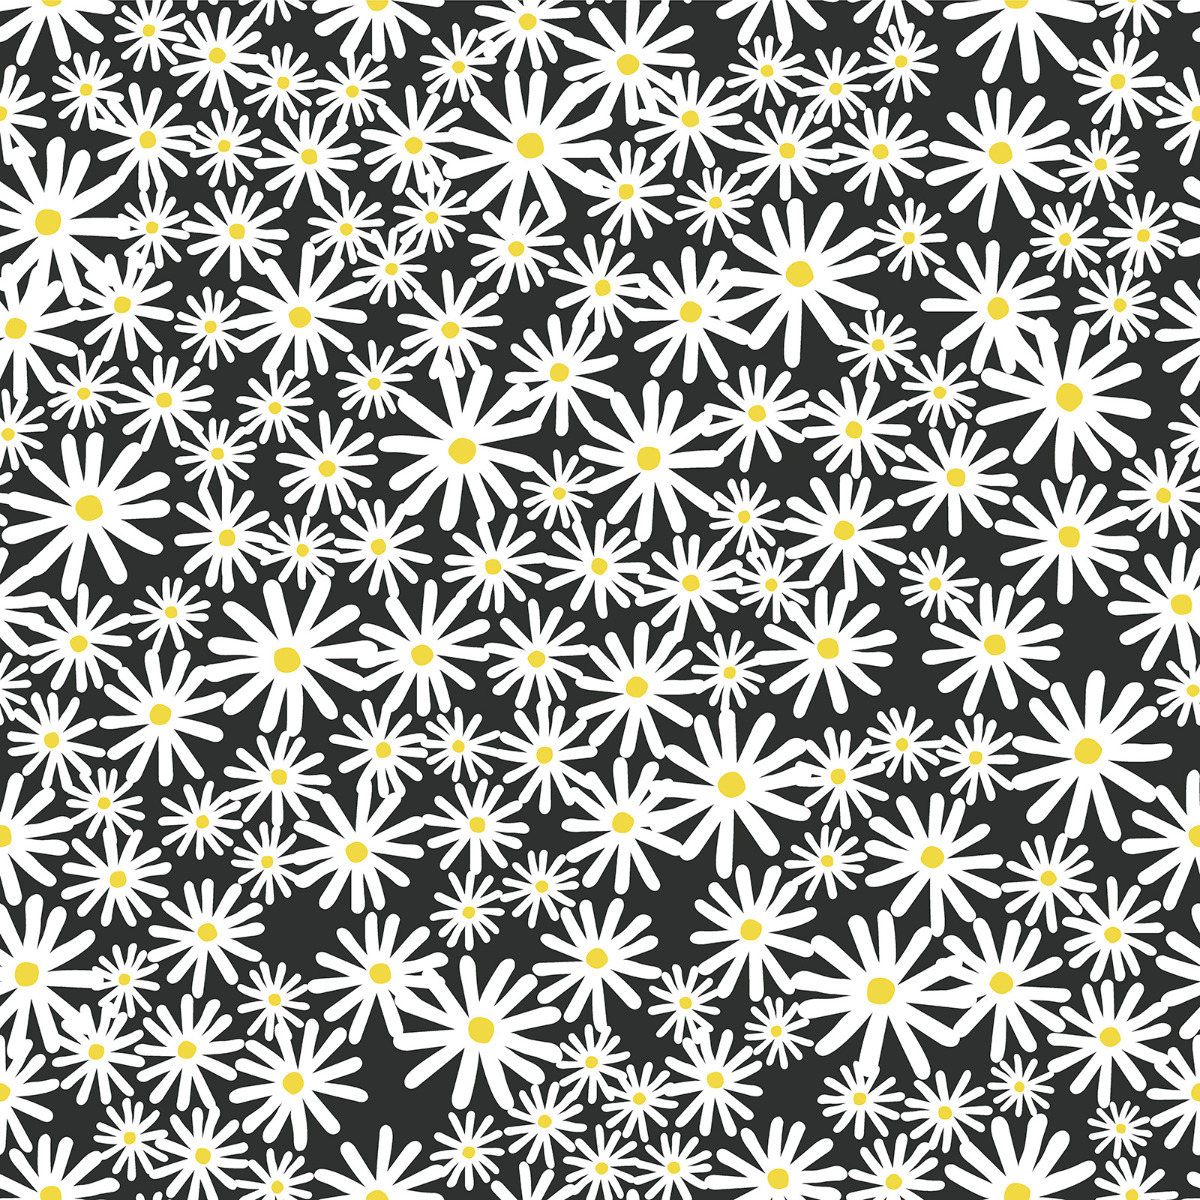 Skinnydip Daisy Floral Wallpaper Black 180510